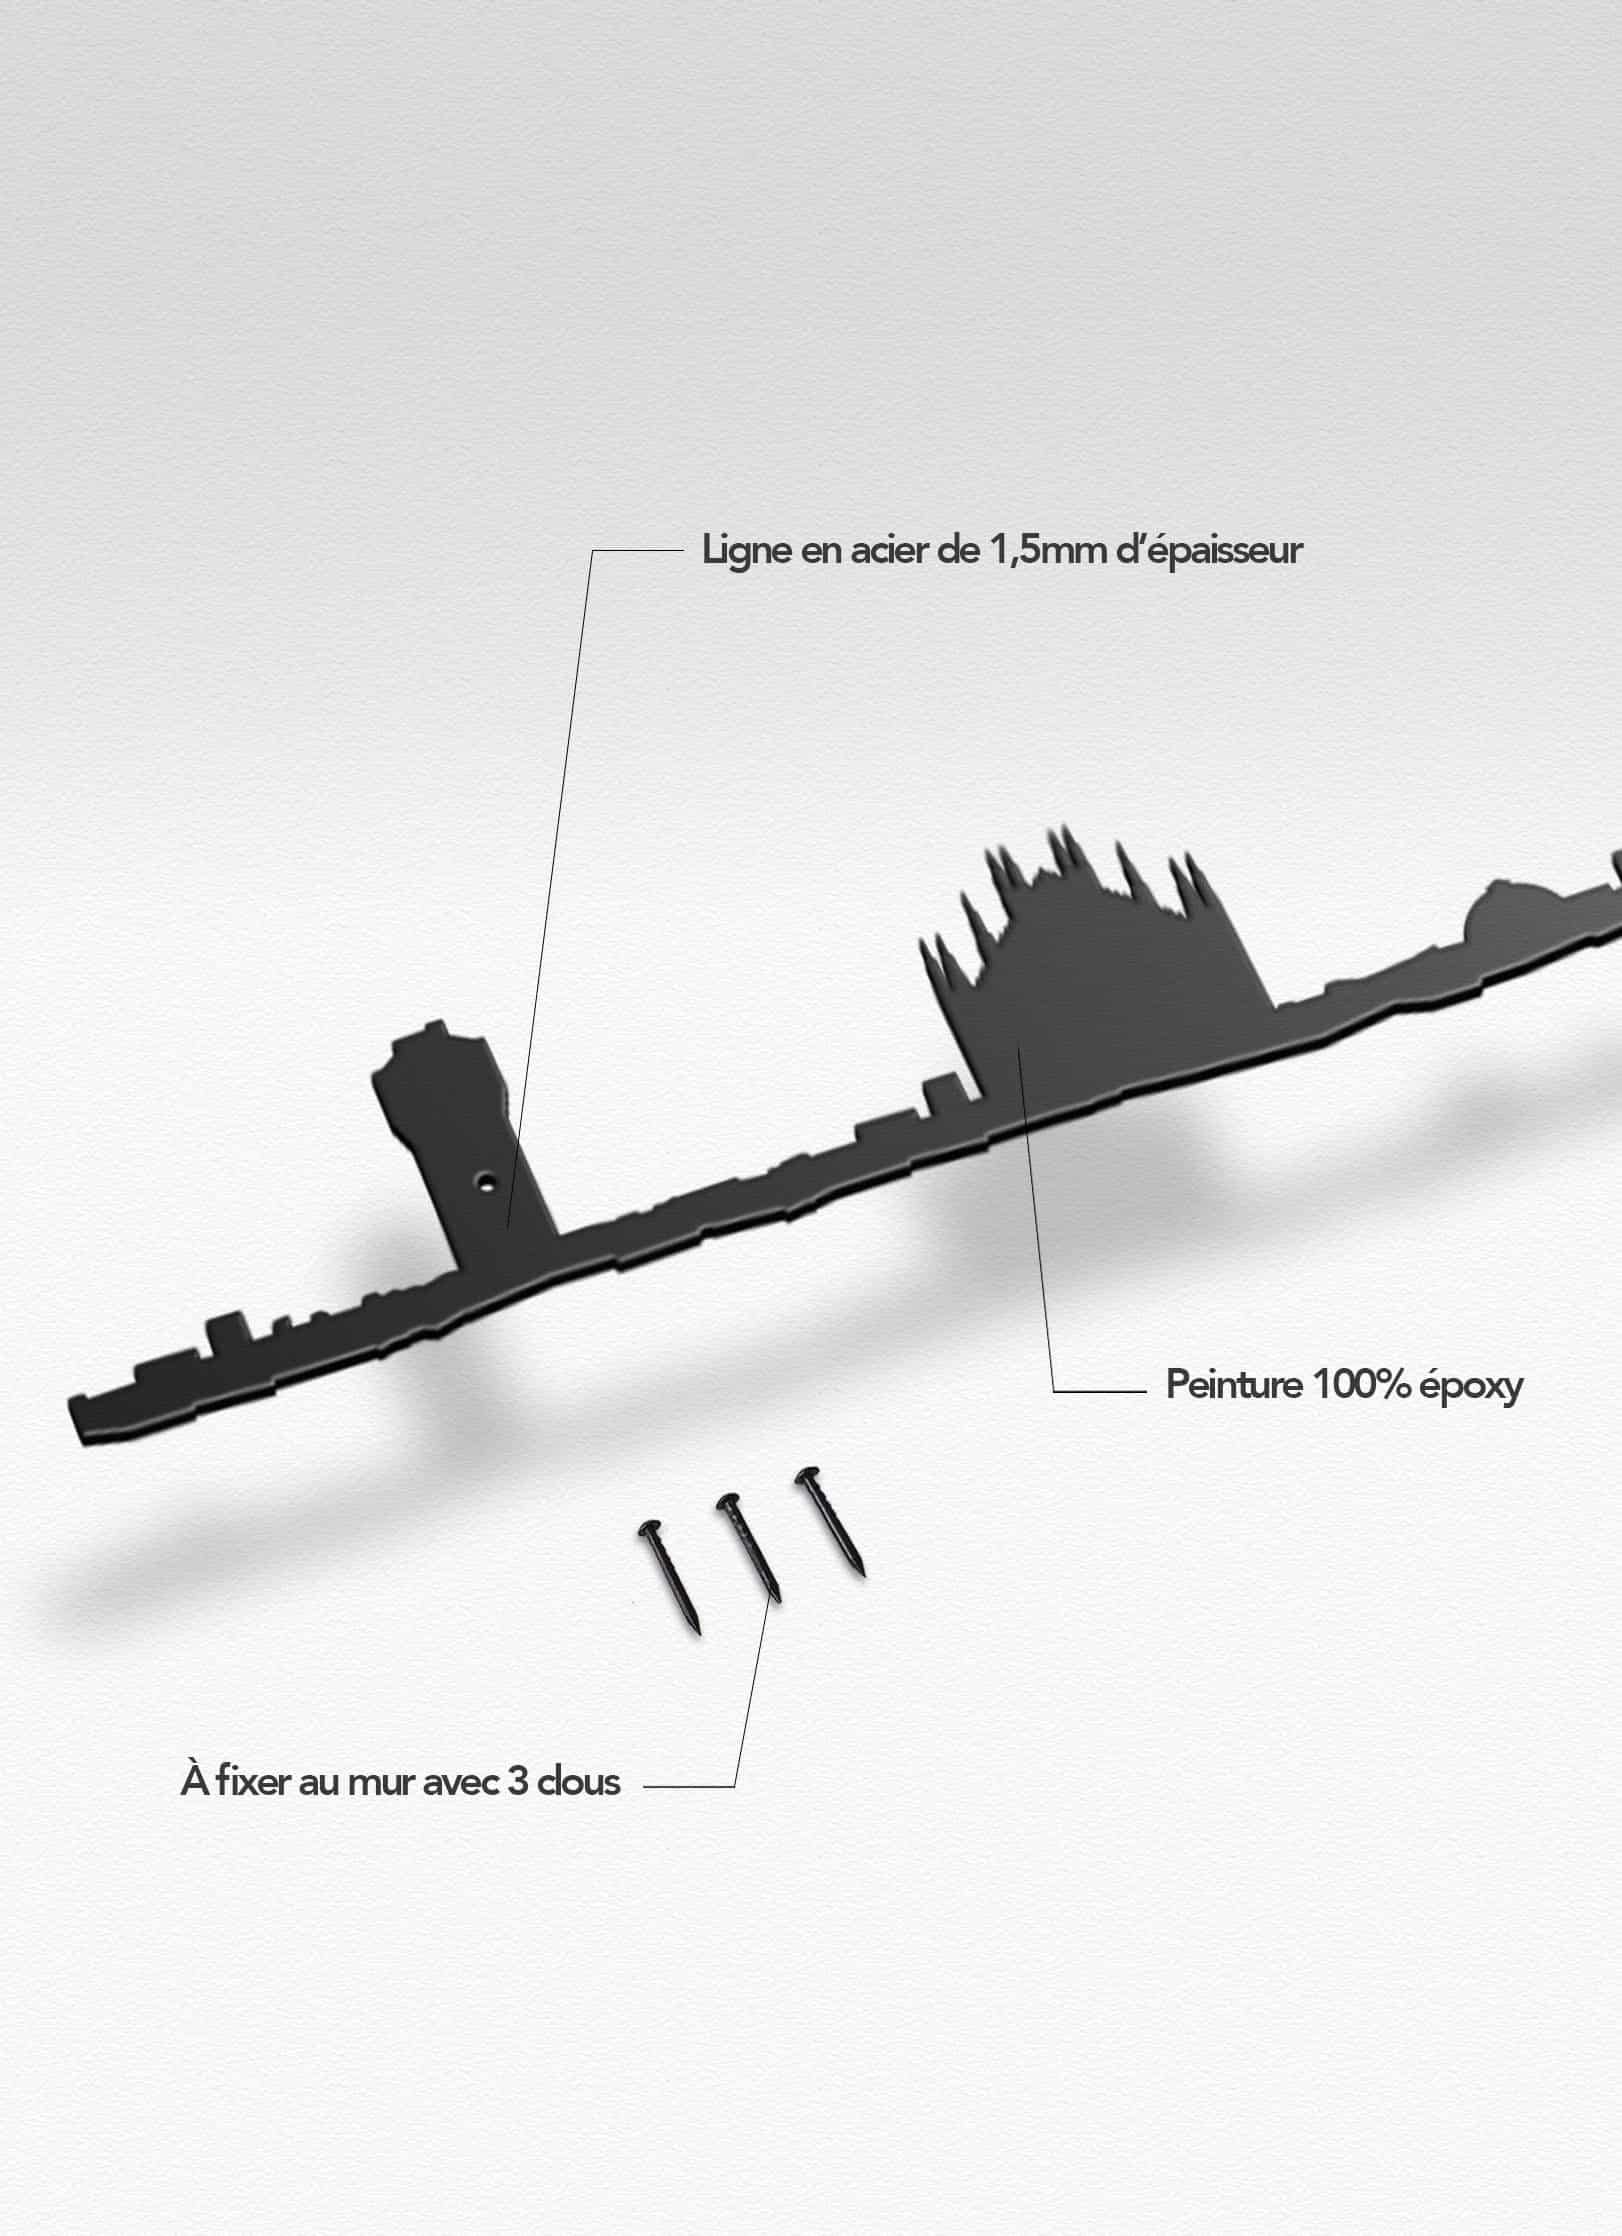 Presentation of the skyline of Milan